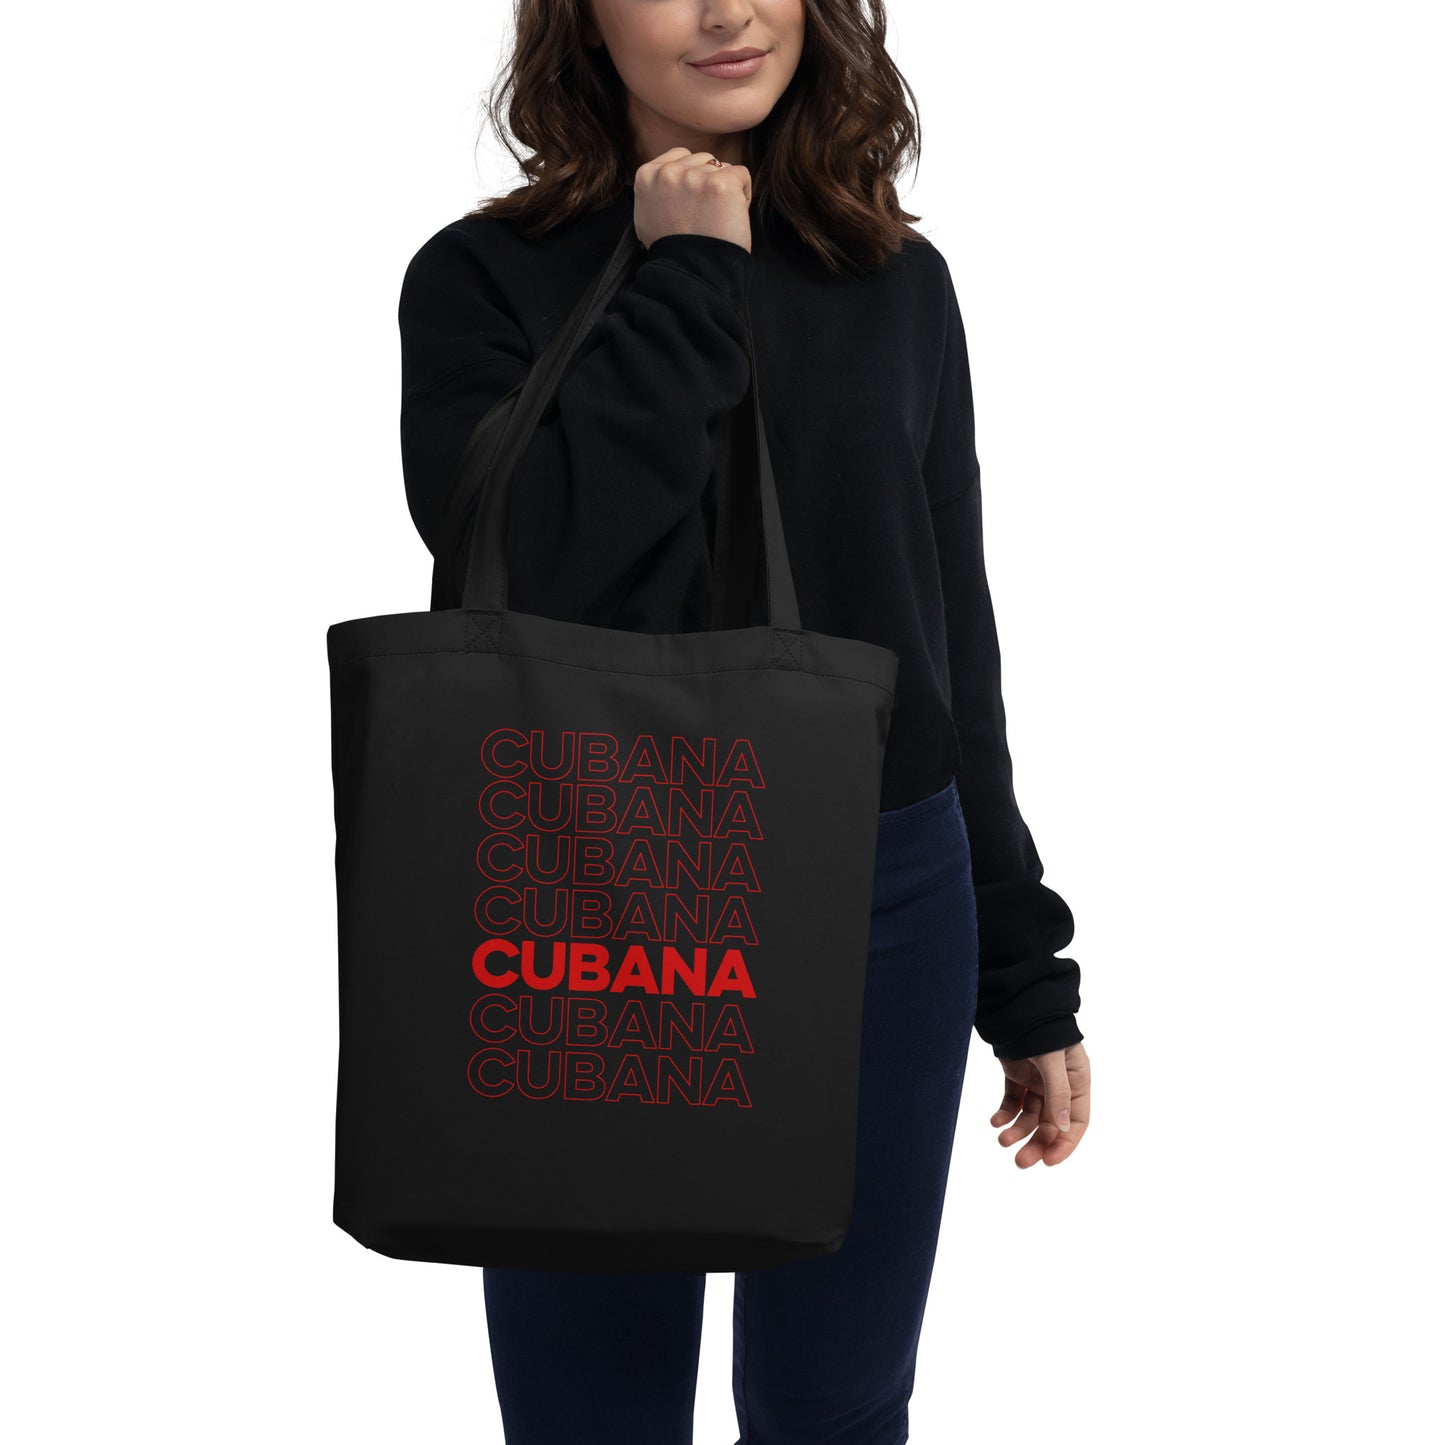 Cubana Tote Bag